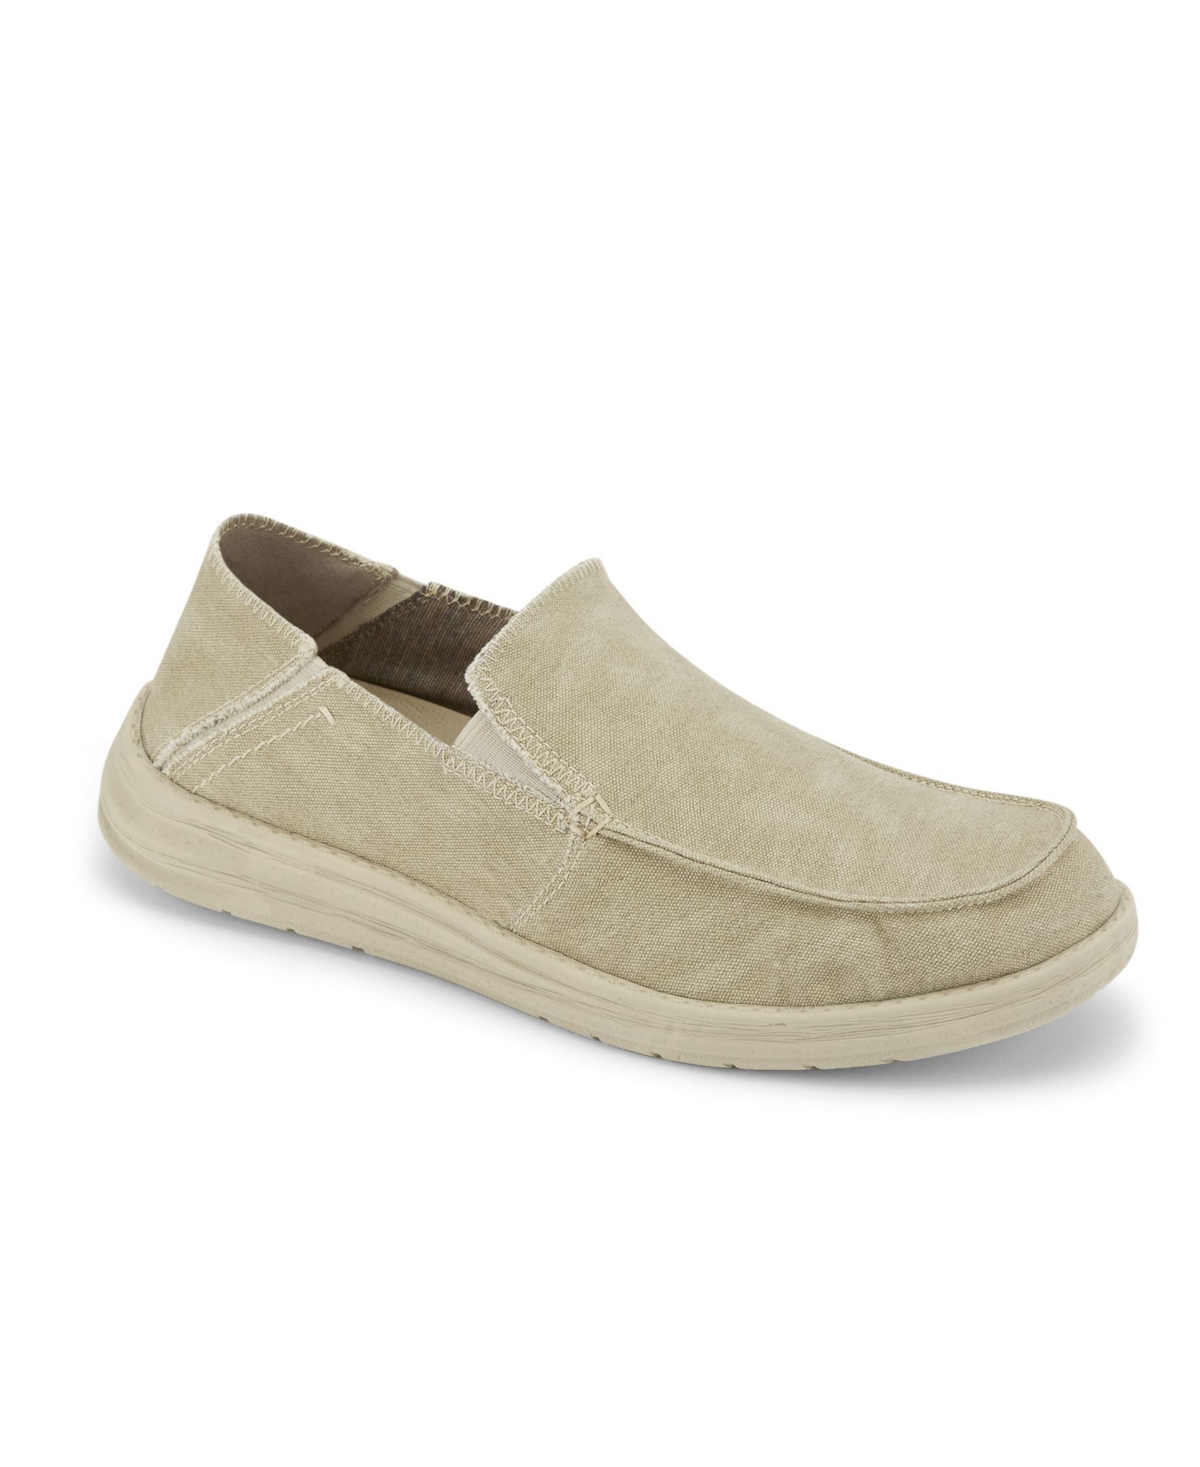 Men's Ferris Jersey Comfort Loafer - Sand